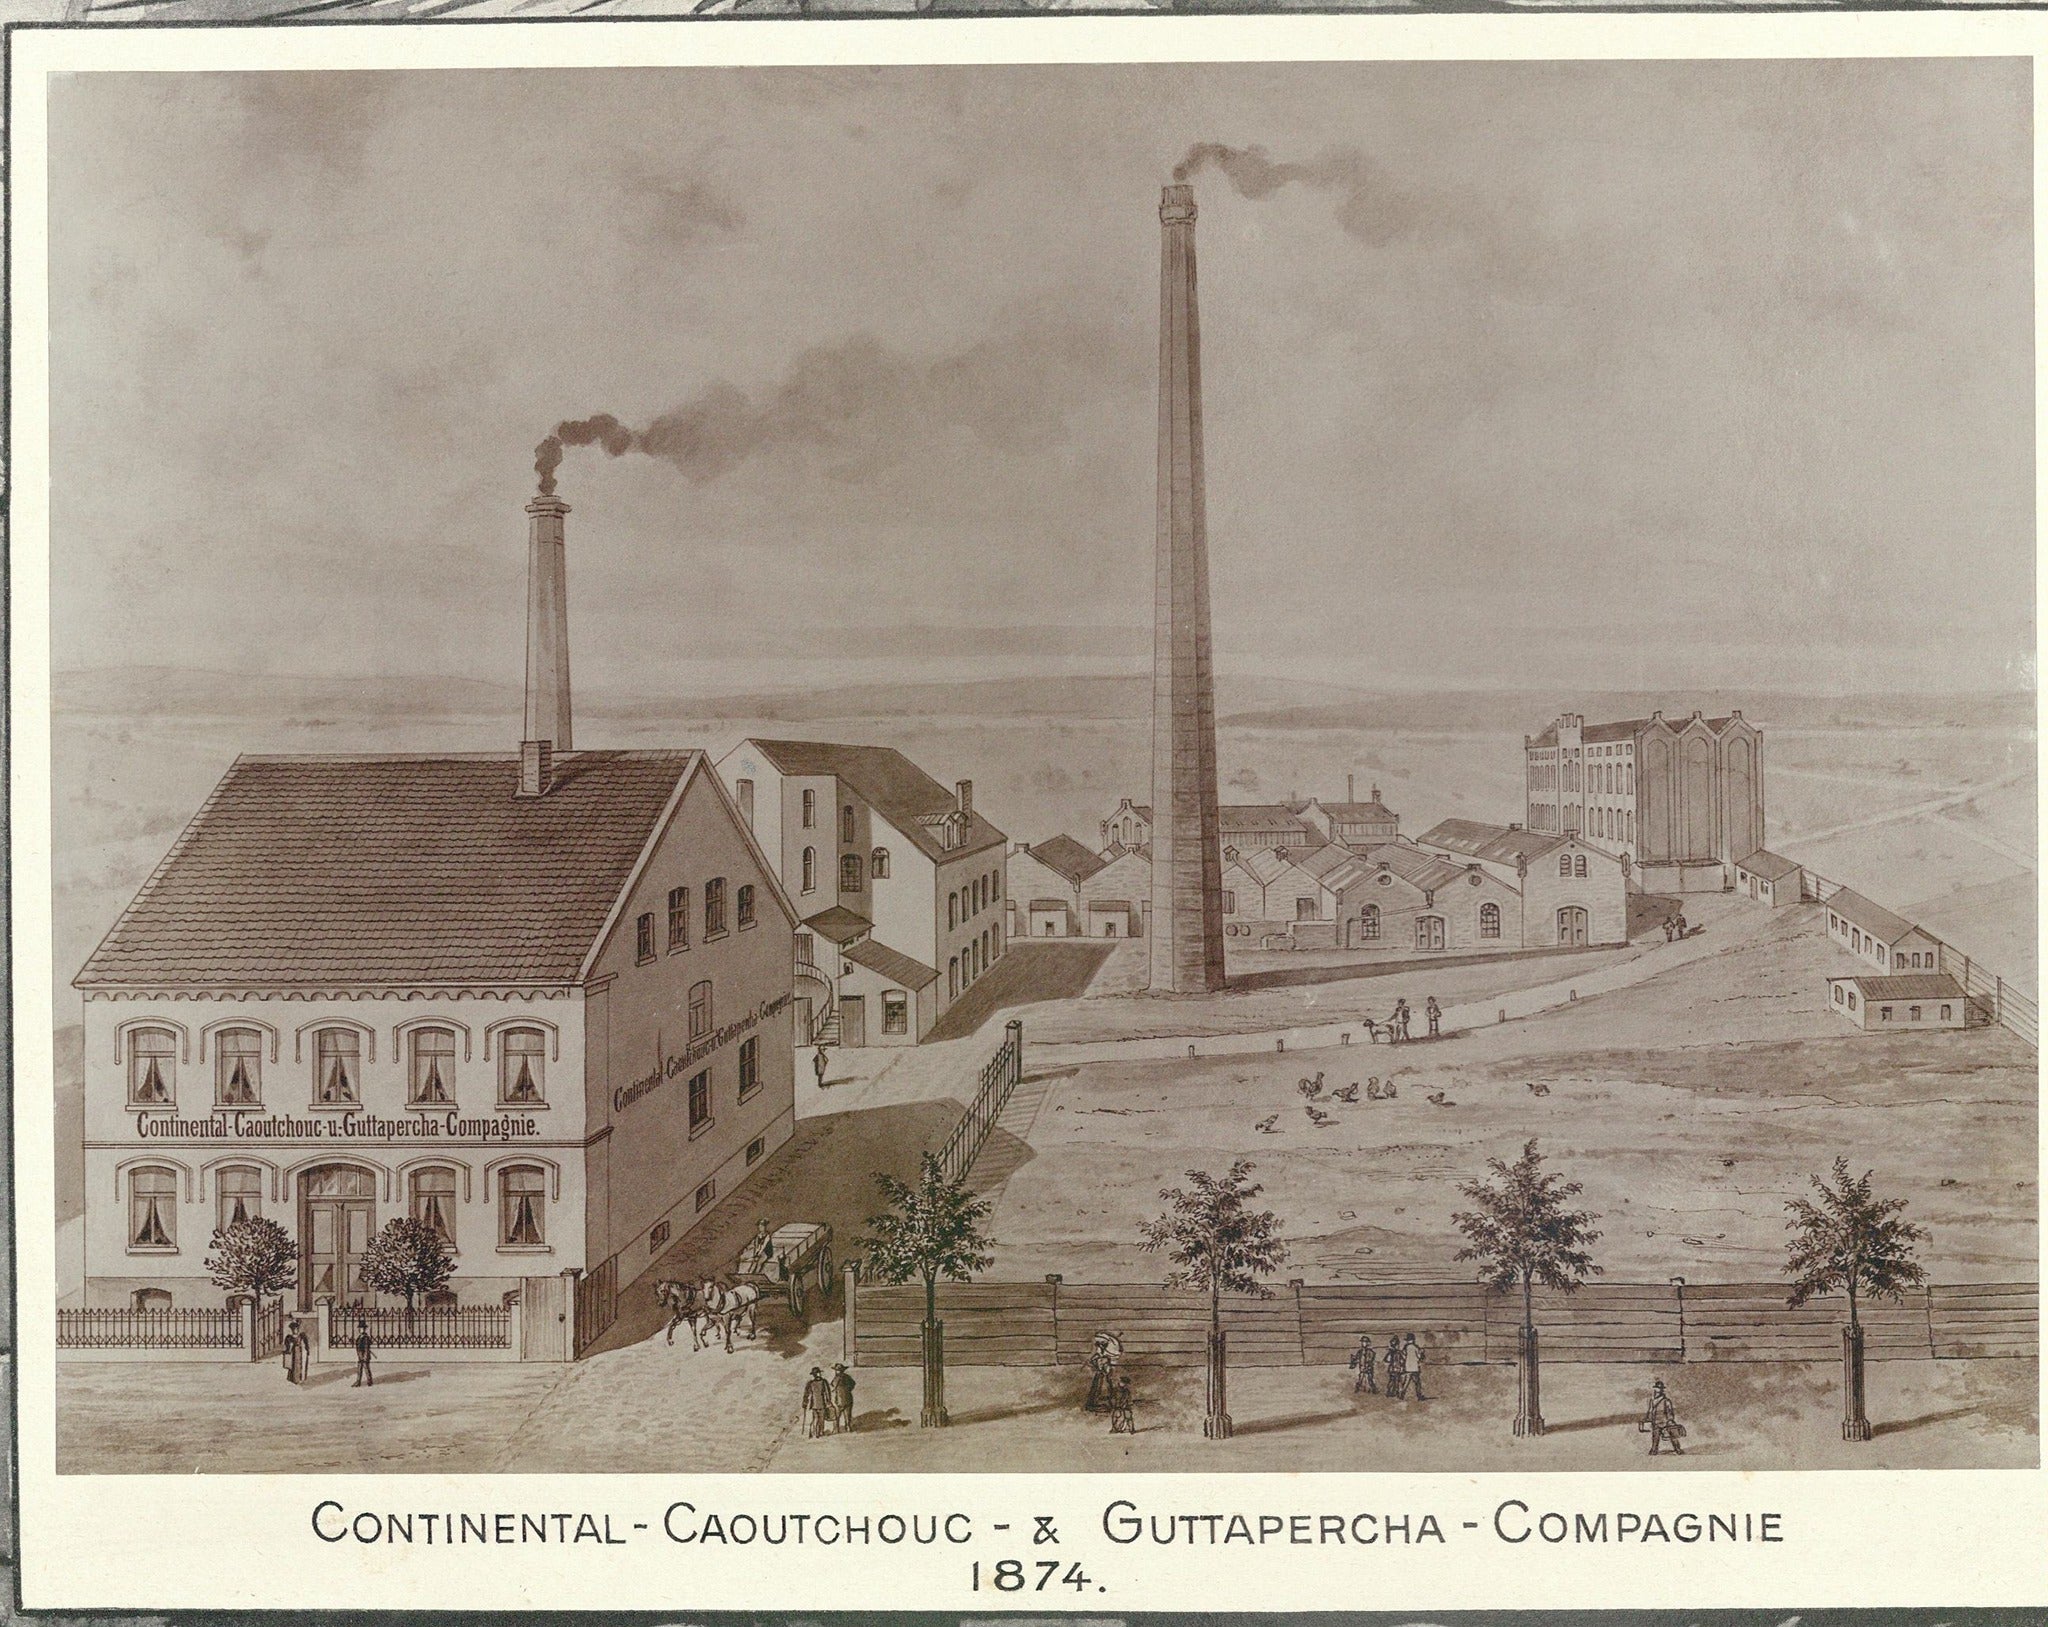 Afbeelding Continental Caoutchouc & Gutta-Percha Company